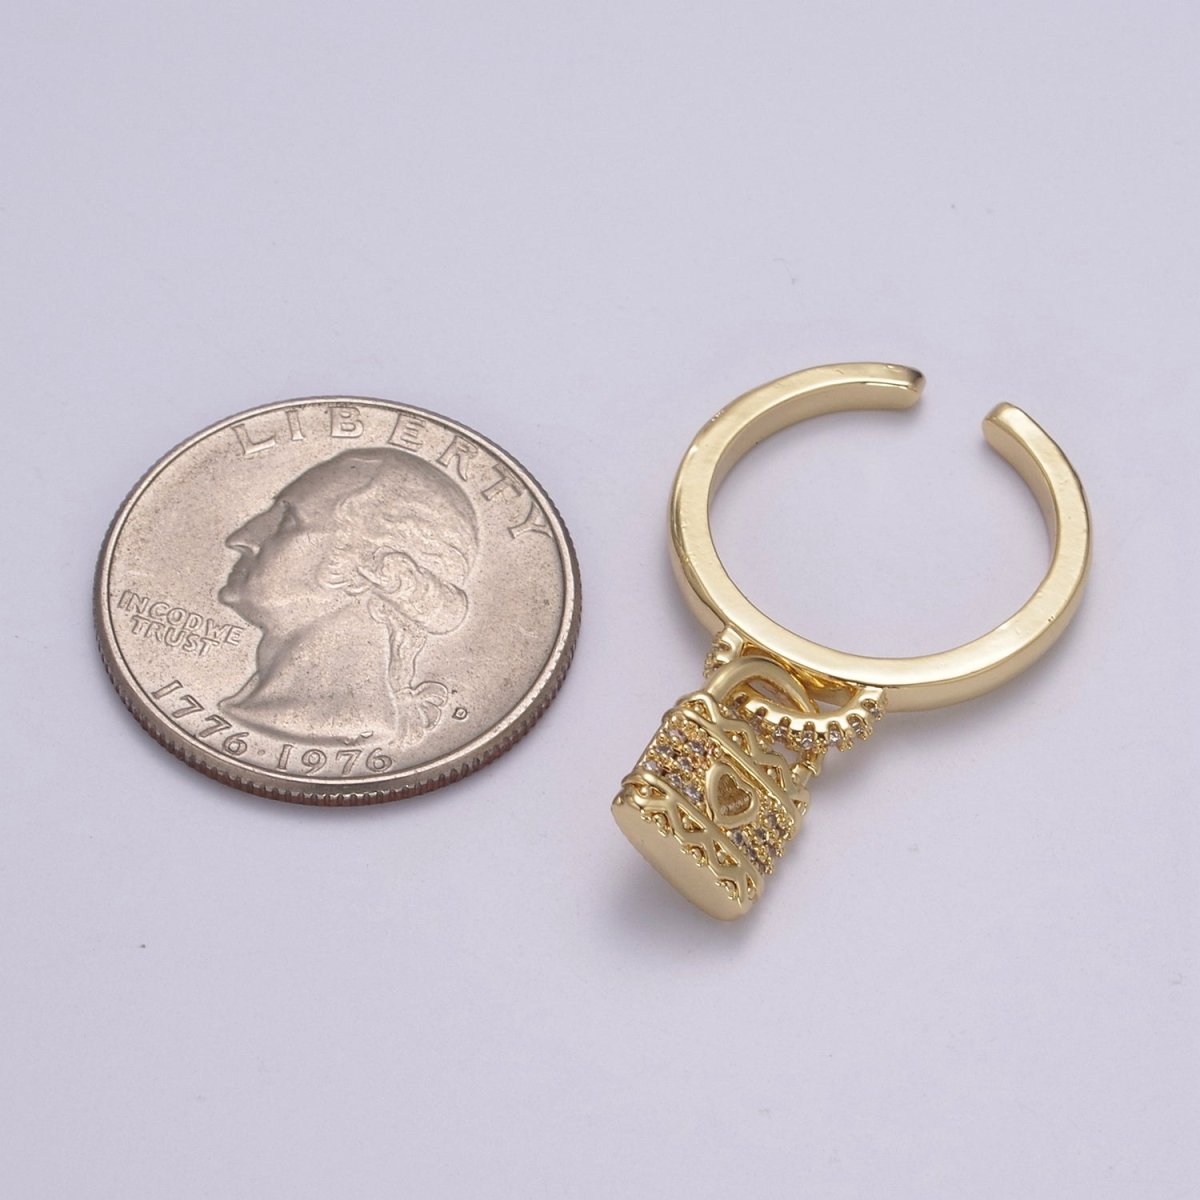 Silver / Gold Love Lock Ring Cuff Open Ring Adjustable Women Padlock Jewelry U-213 U-214 - DLUXCA